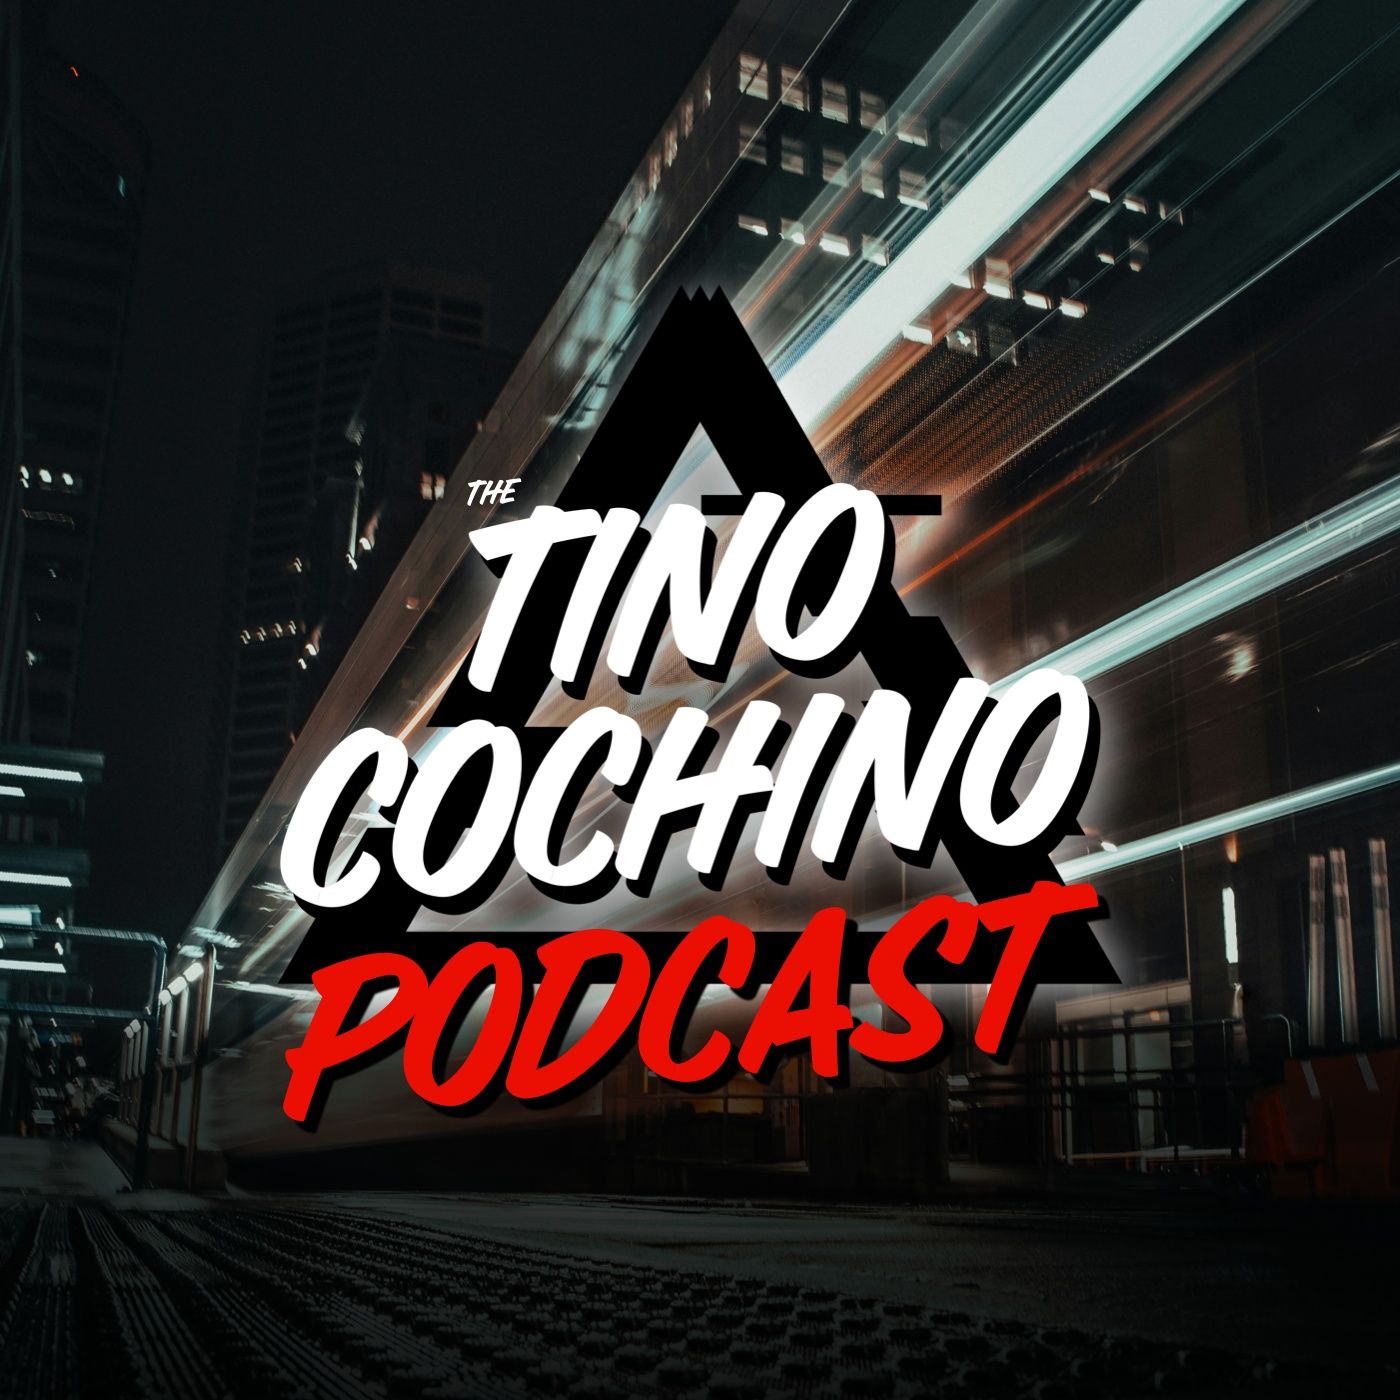 The Tino Cochino Radio Podcast